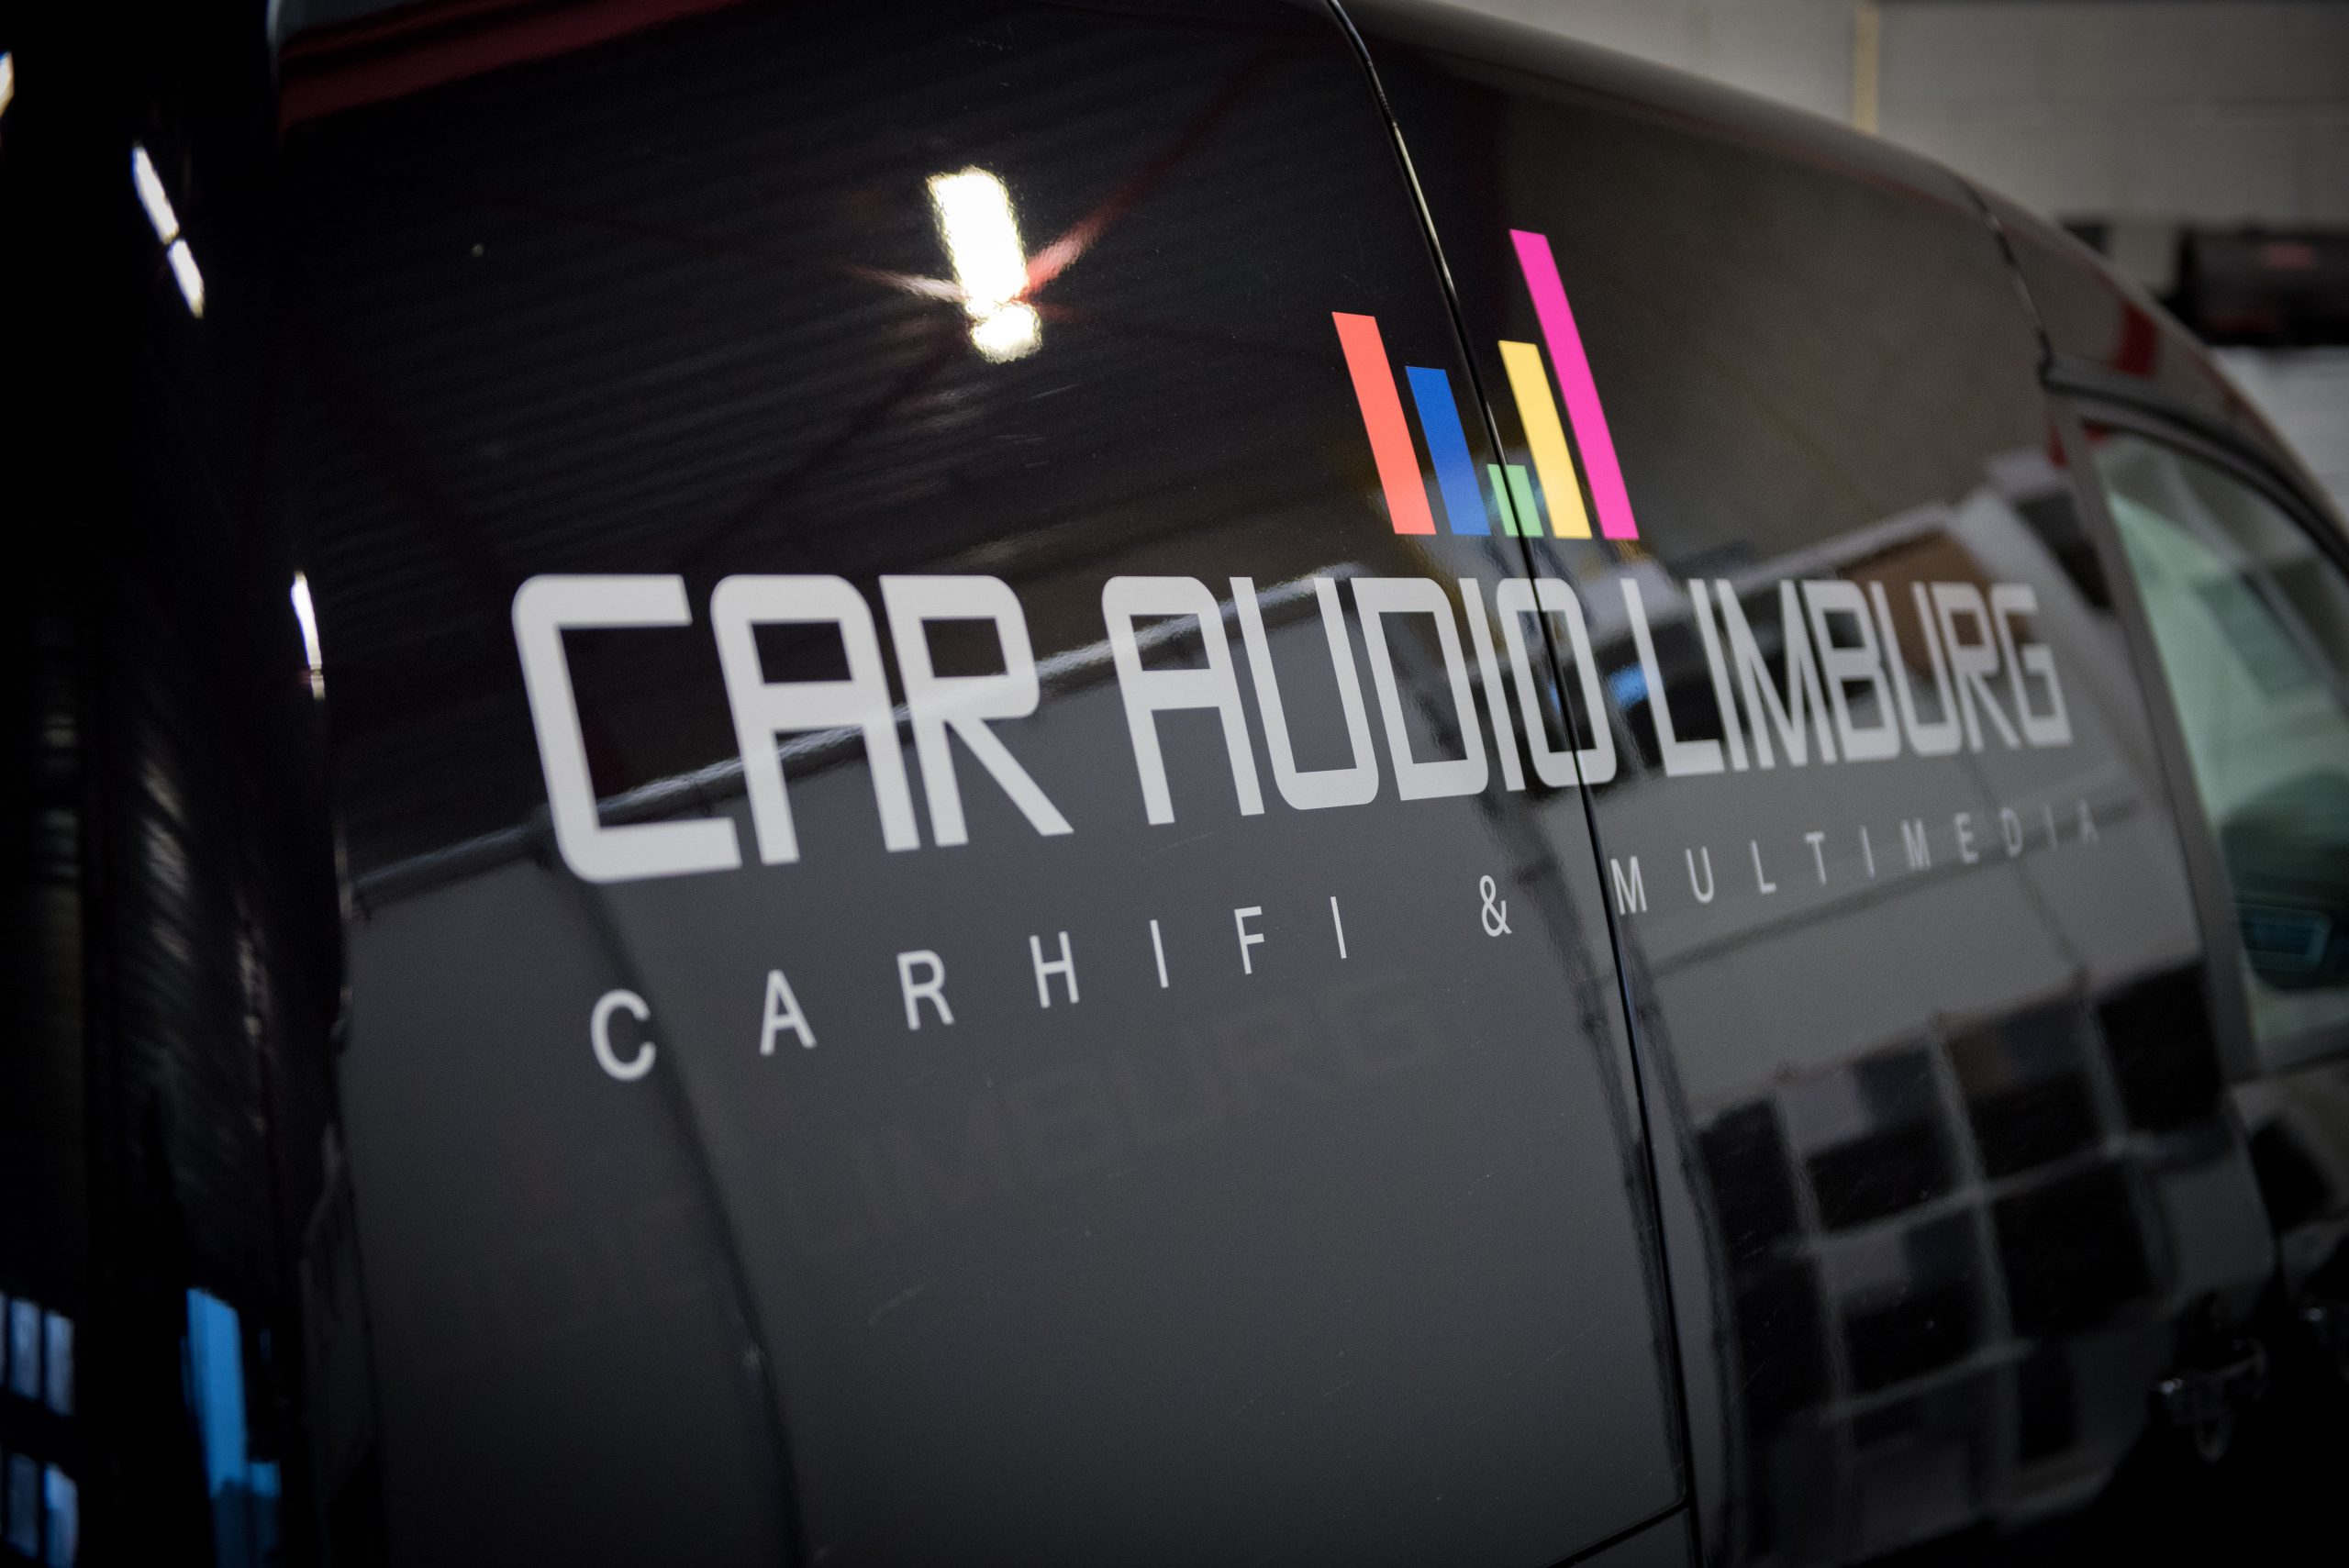 Car Audio Limburg: CARHIFI & MULTIMEDIA